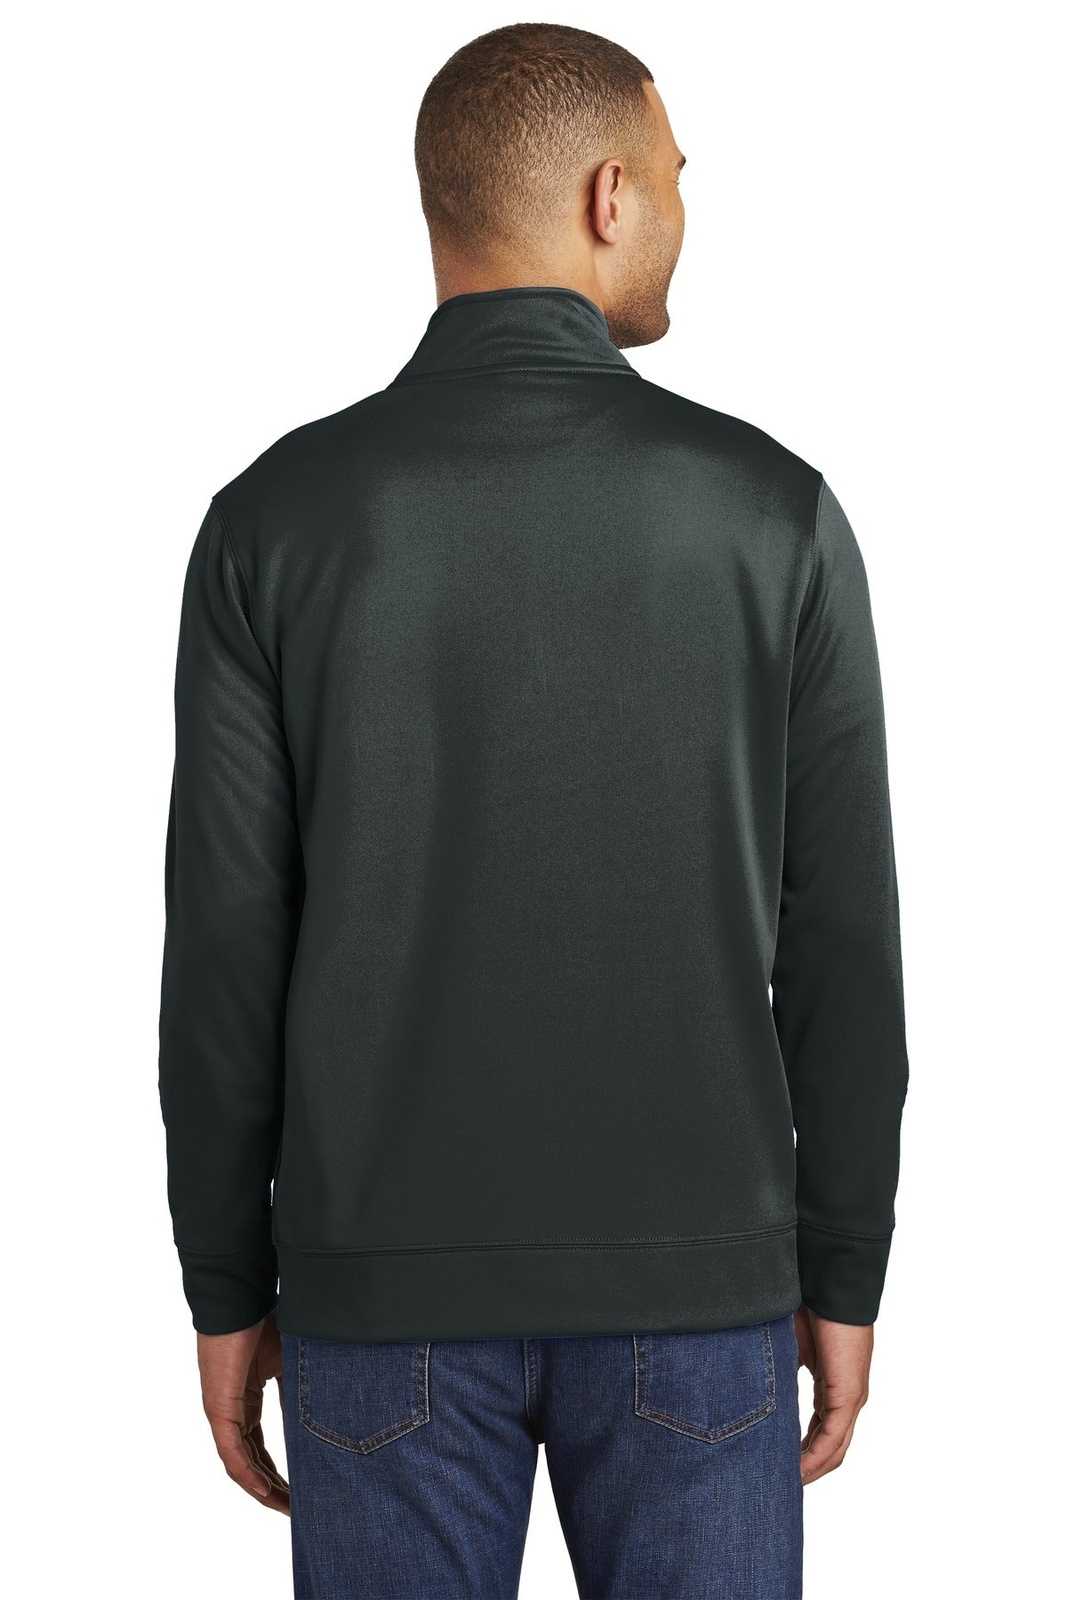 Port & Company PC590Q Fleece 1/4-Zip Pullover Sweatshirt - Jet Black - HIT a Double - 1